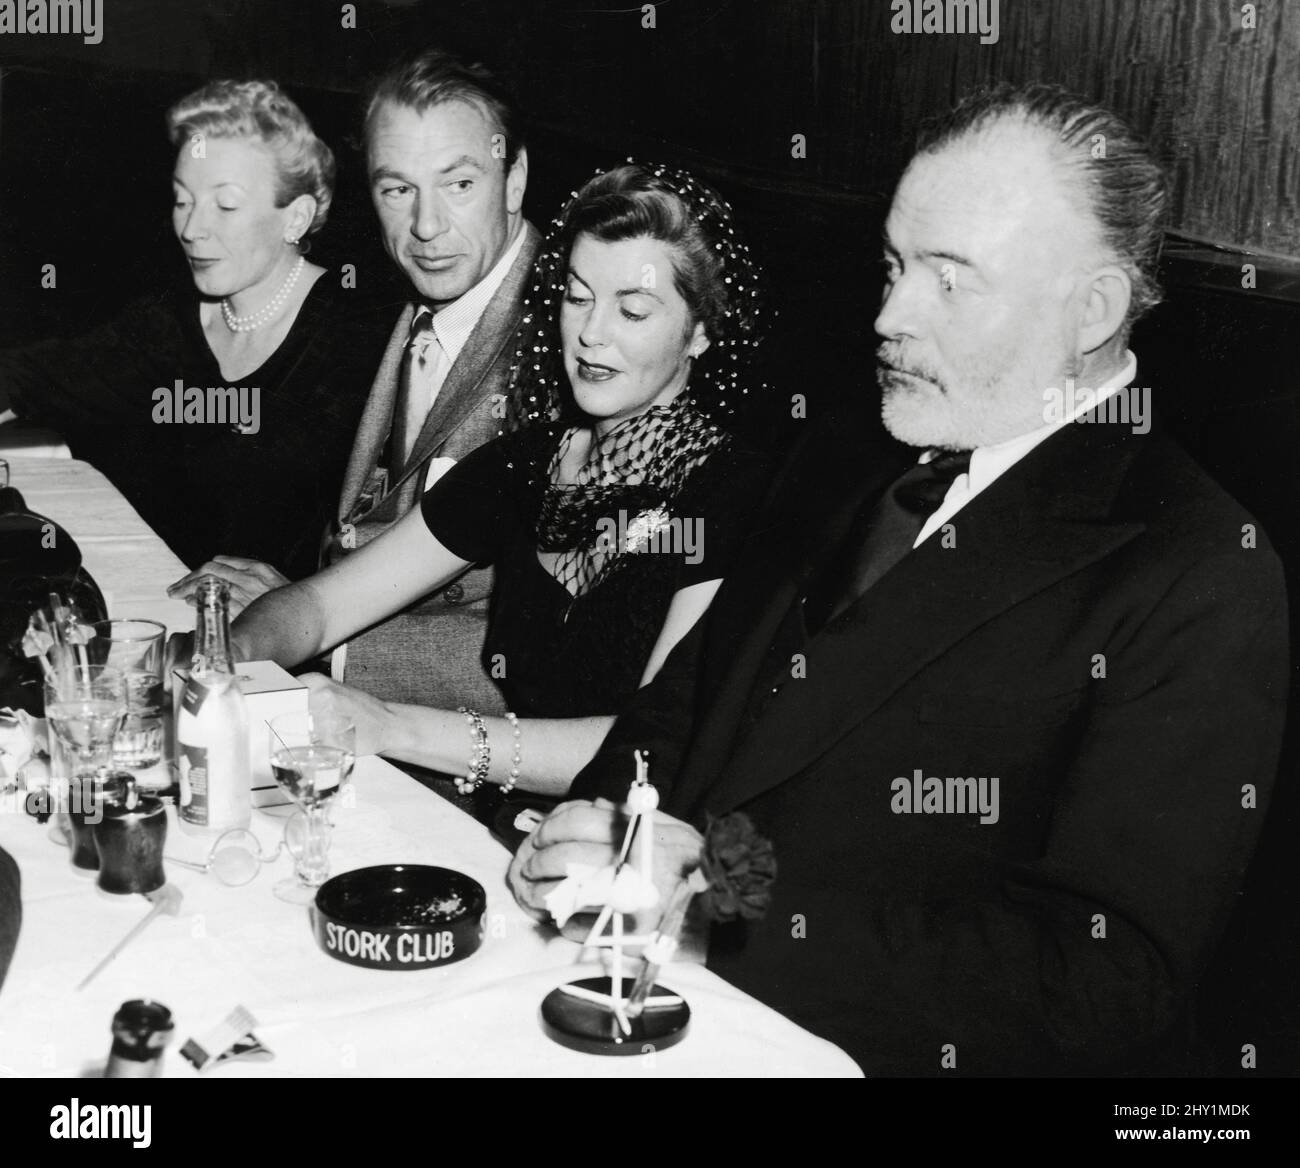 Martha Hemingway, Gary Cooper, Veronica Balfe, Ernest Hemingway at the Stork Club, New York City, 1943. File Reference # 34145-731THA Stock Photo